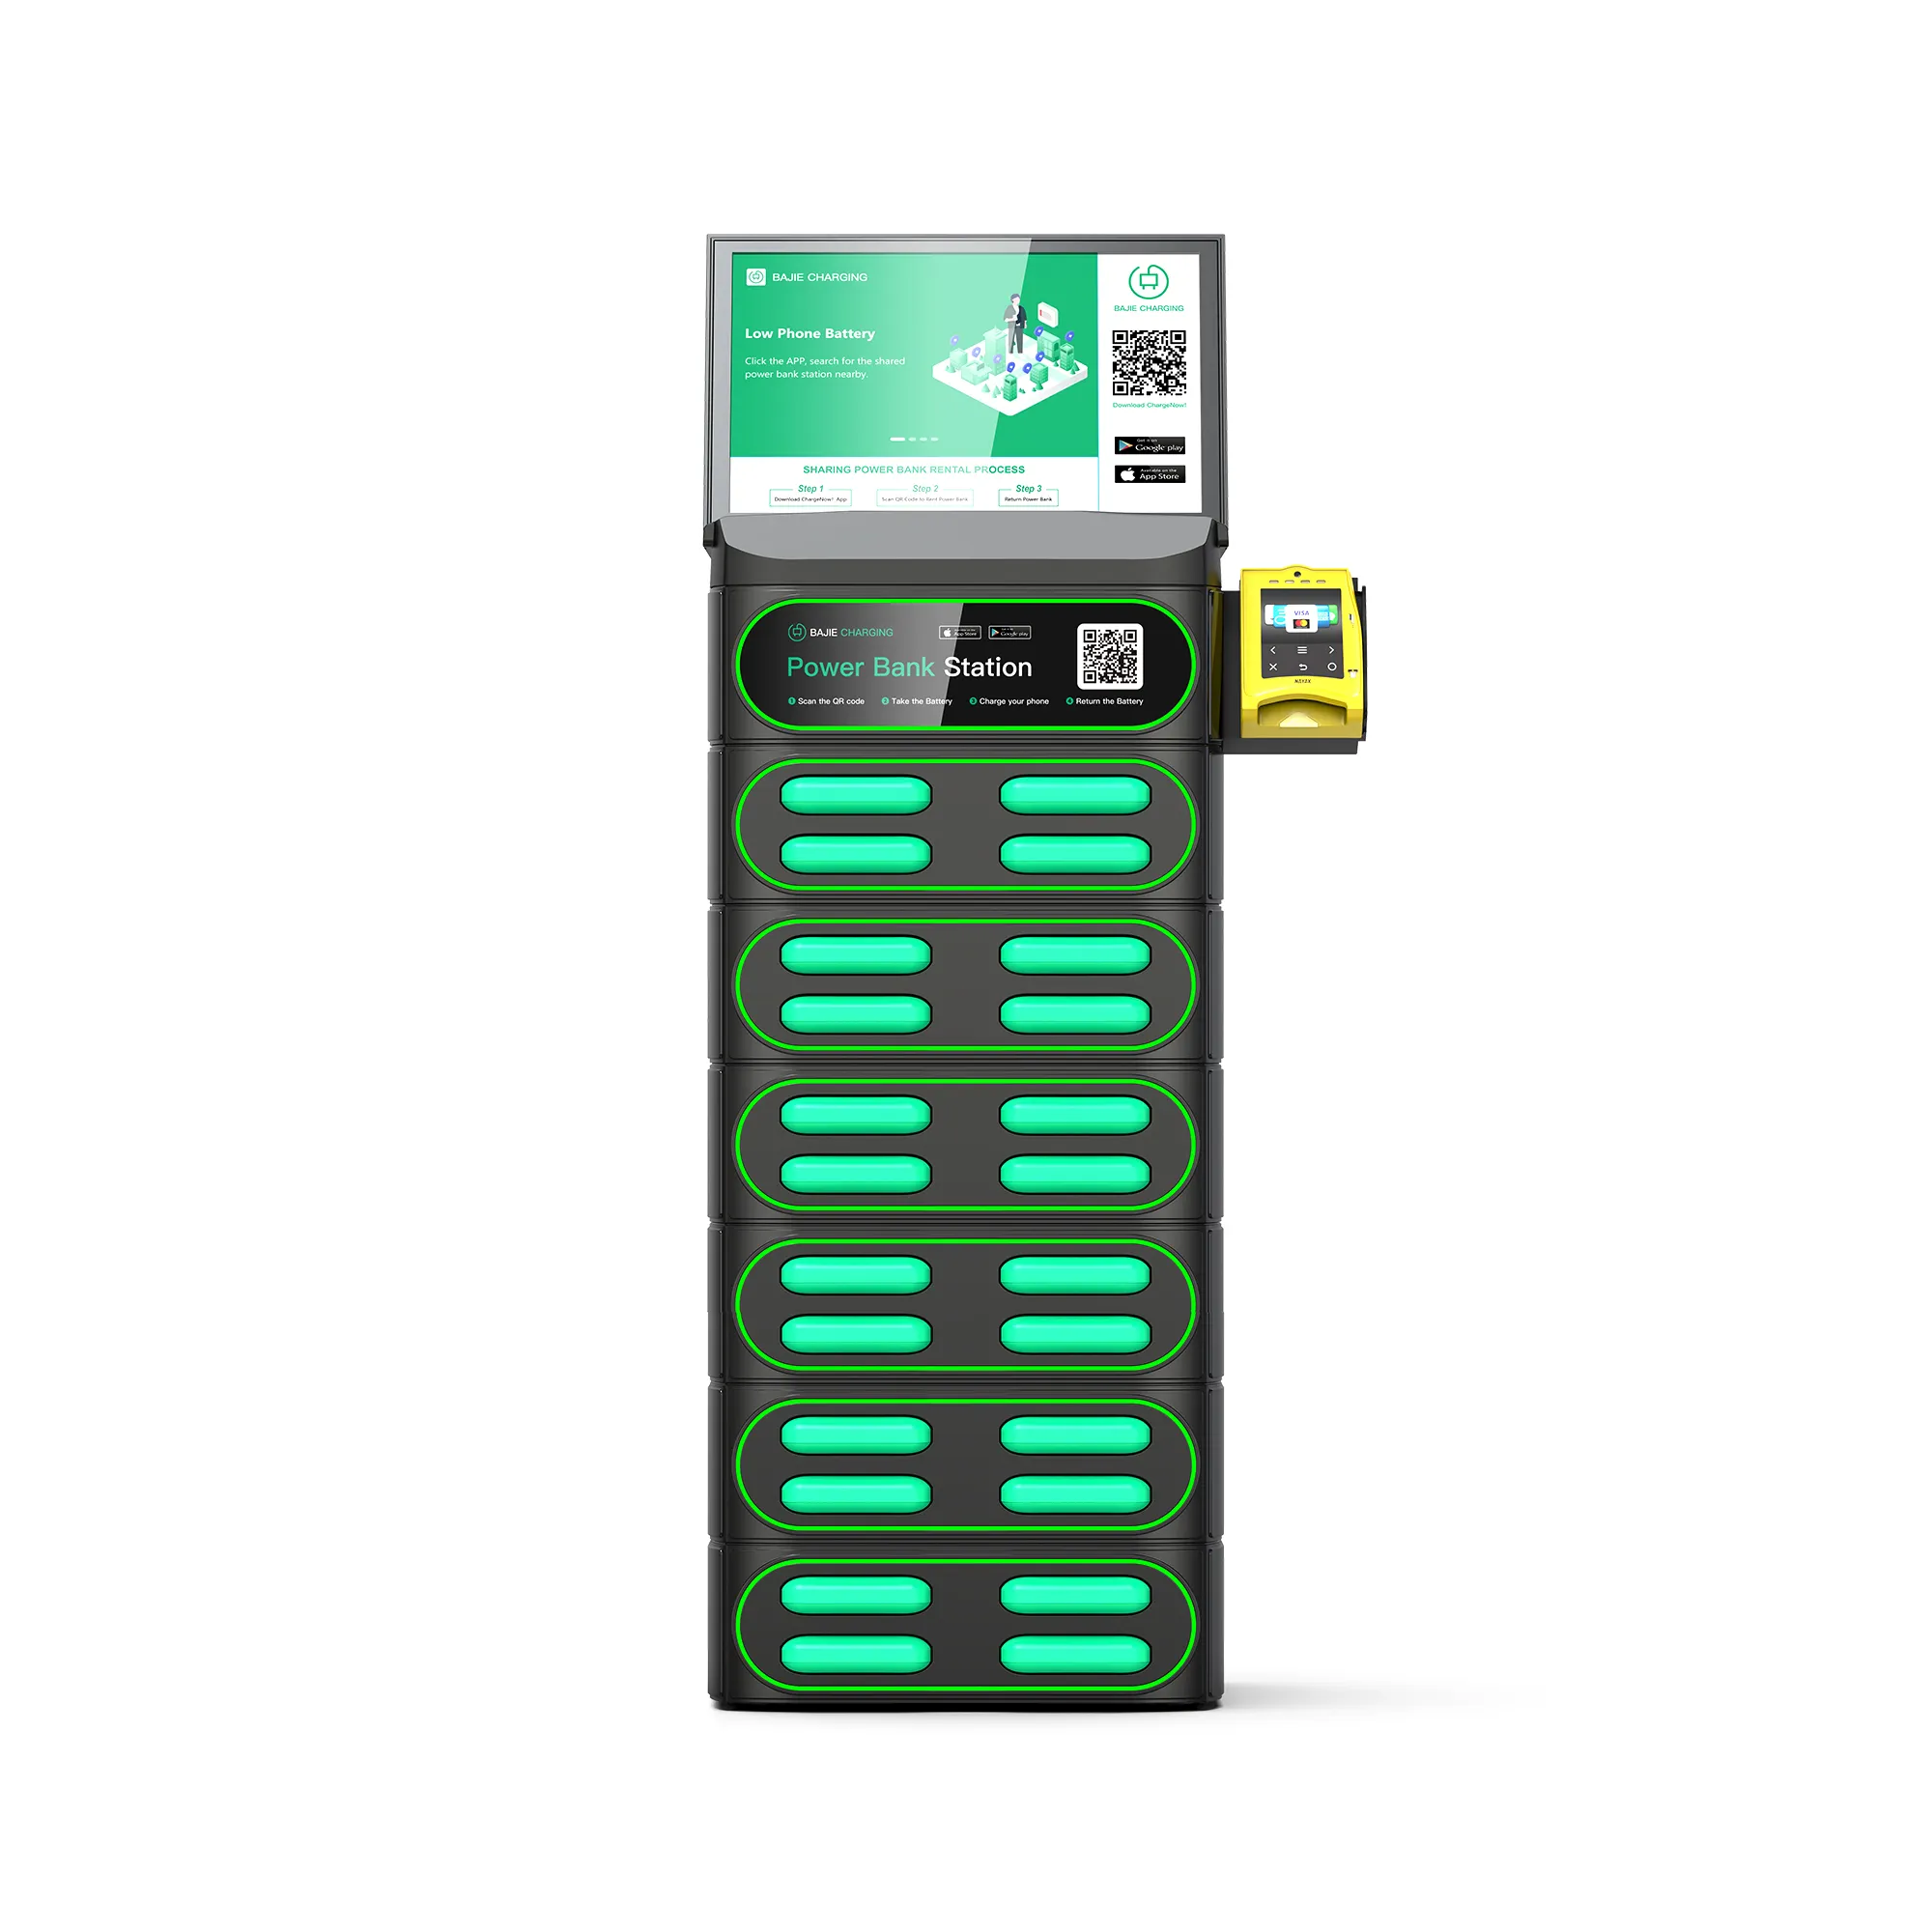 24 Slots stapelbare Mobilfunk-Powerbanks Automaten Miete Ladestation Teilung Powerbank-Station mit Software